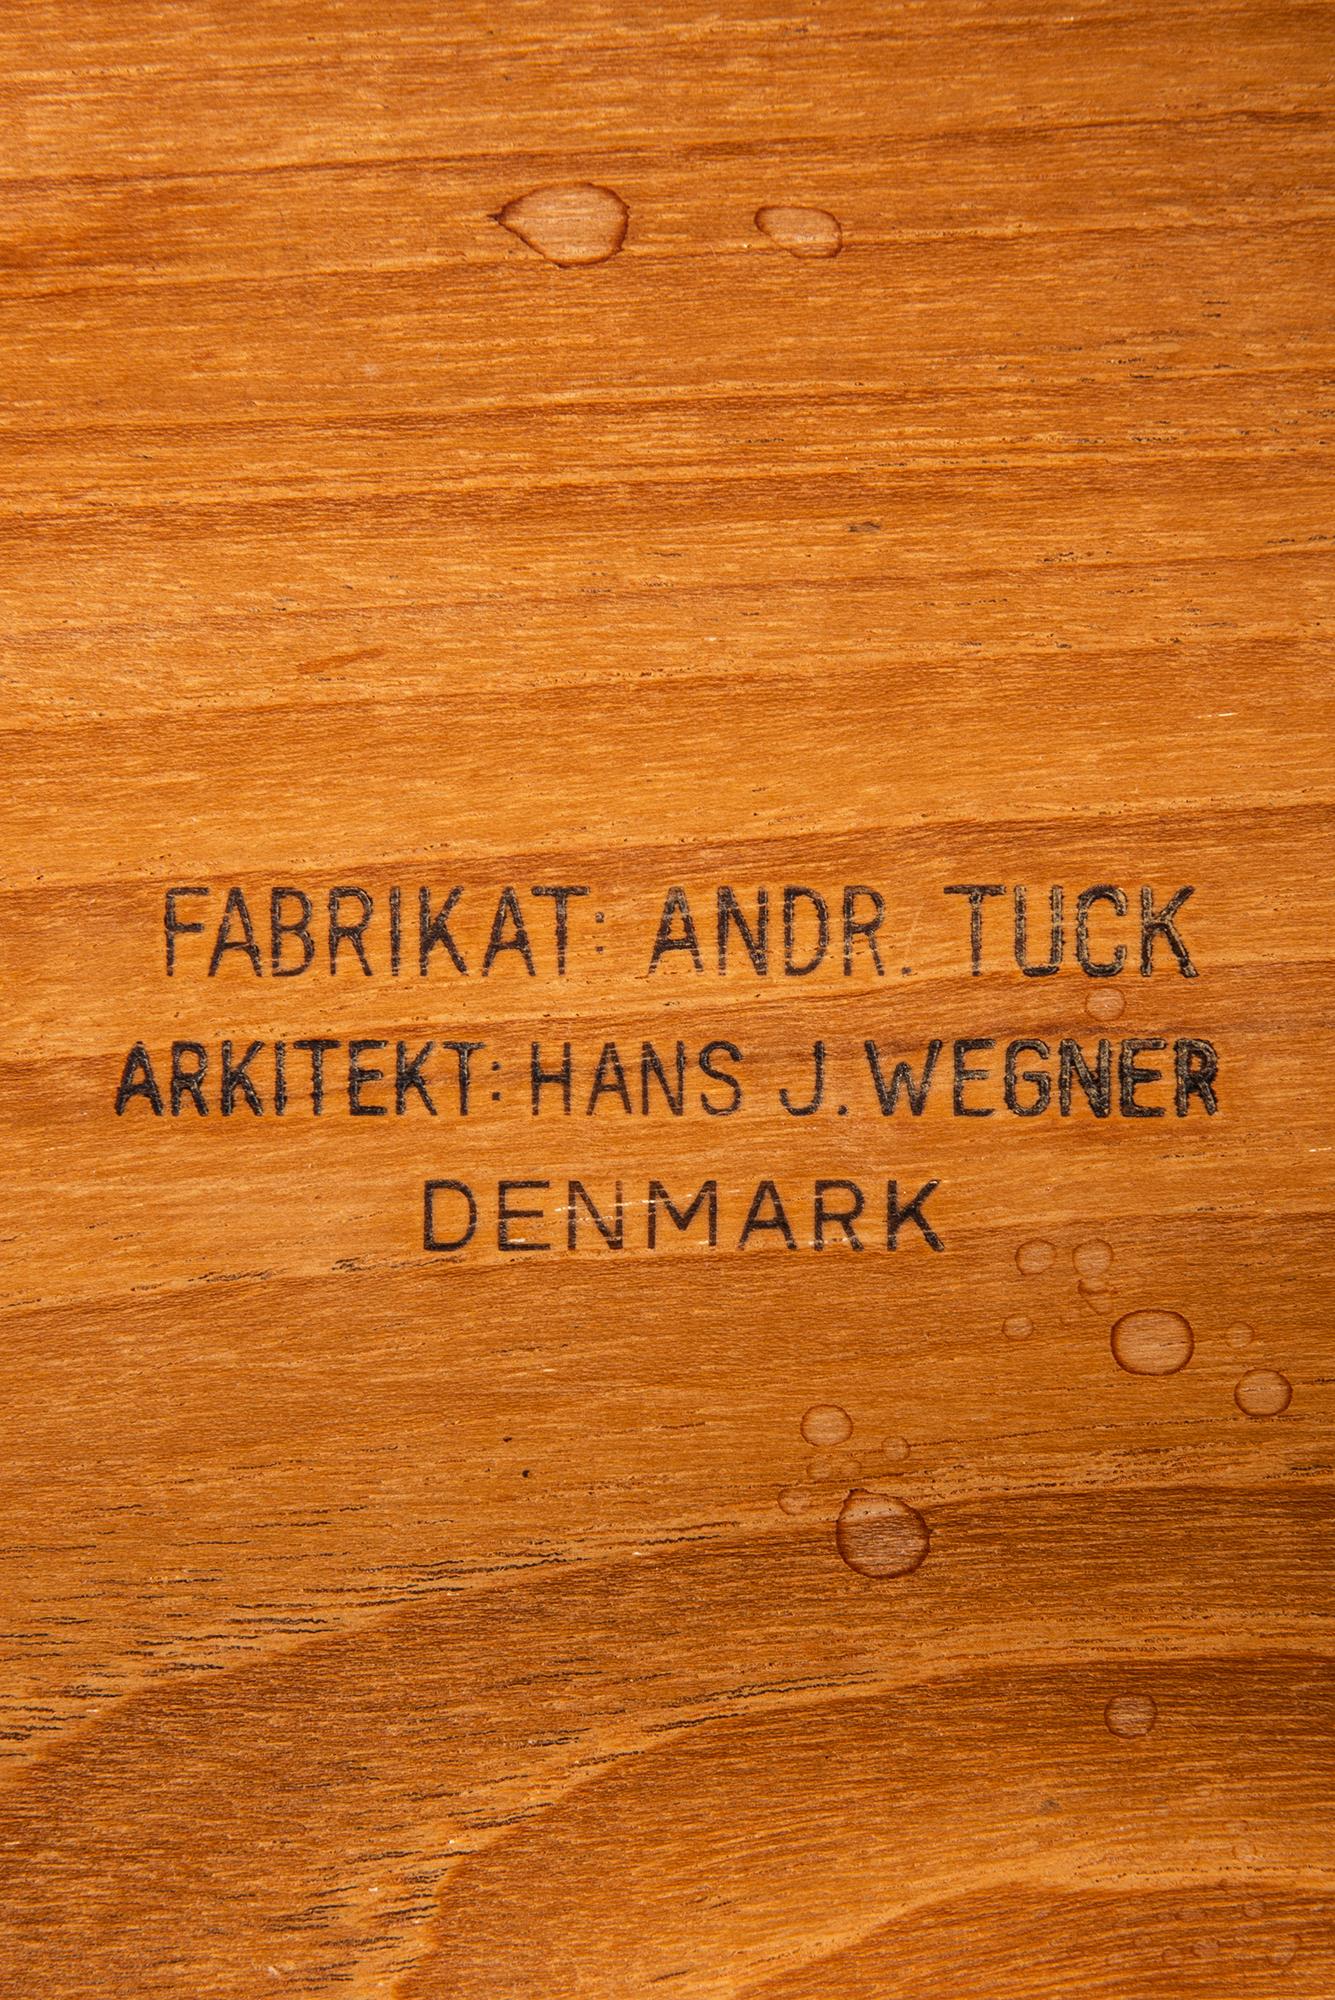 Rare set of nesting tables designed by Hans Wegner. Produced by Andreas Tuck in Denmark.